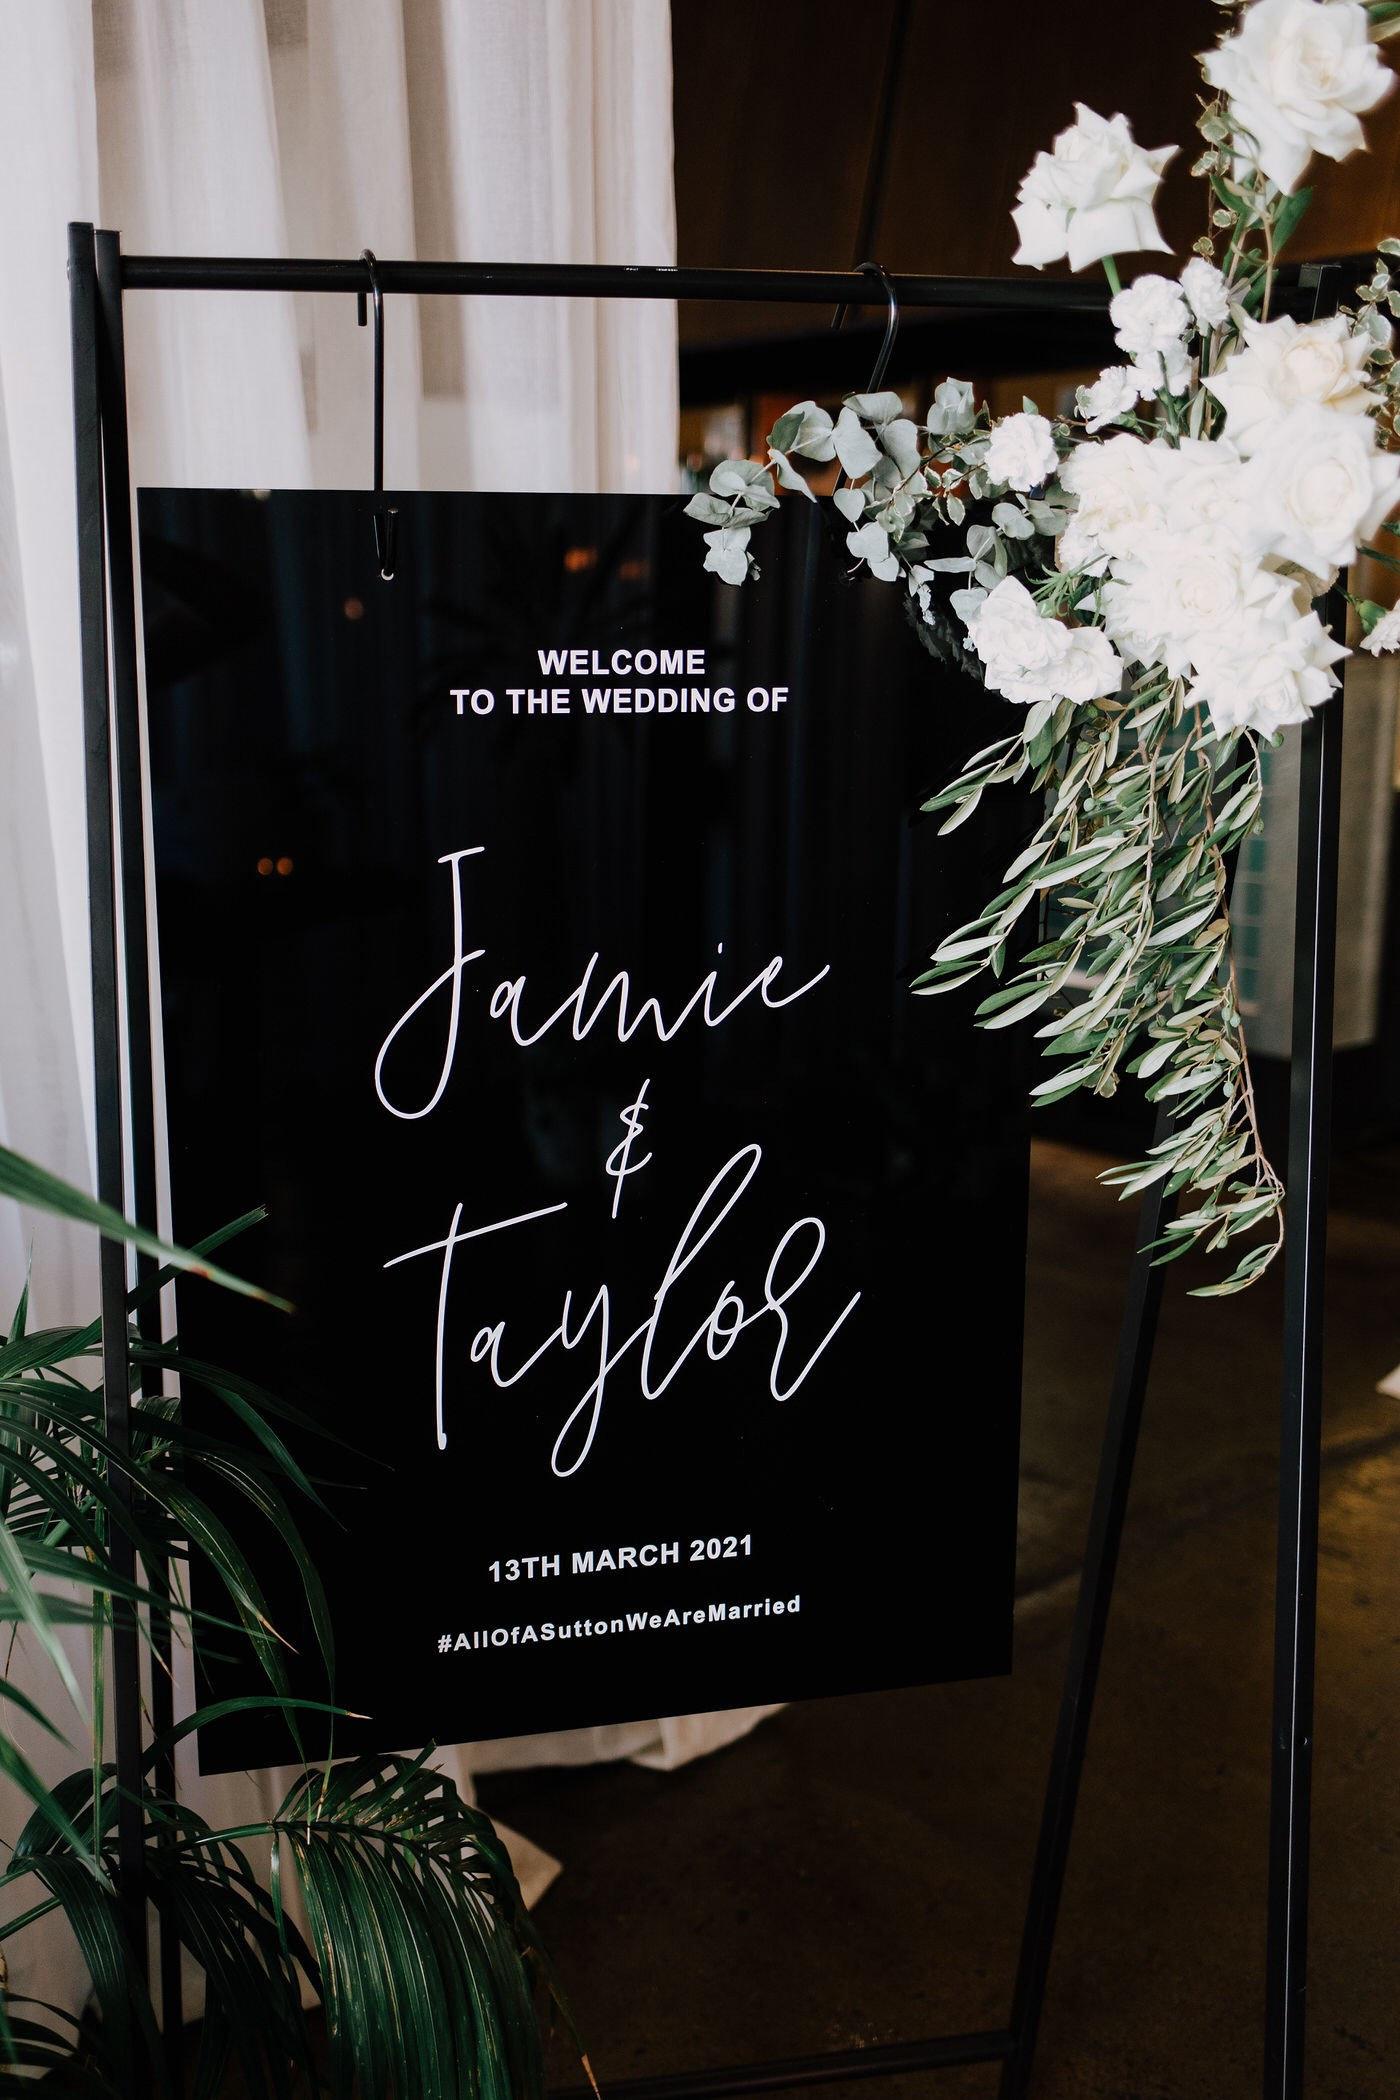 Cartel de bienvenida translúcido texto negro, entrada boda o evento  personalizado - Mumdragora